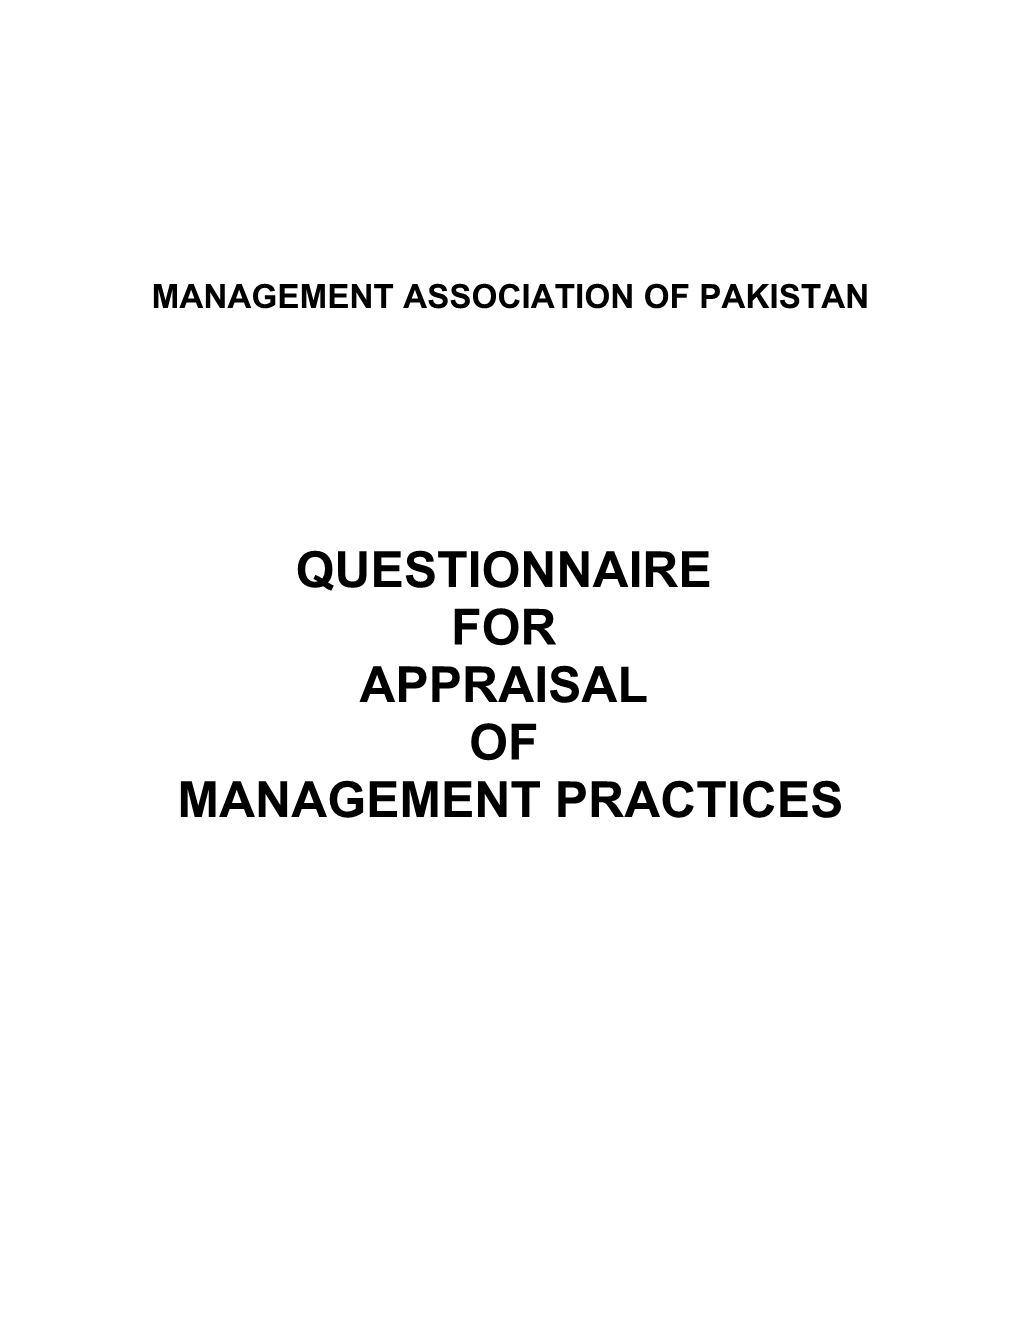 Management Association of Pakistan